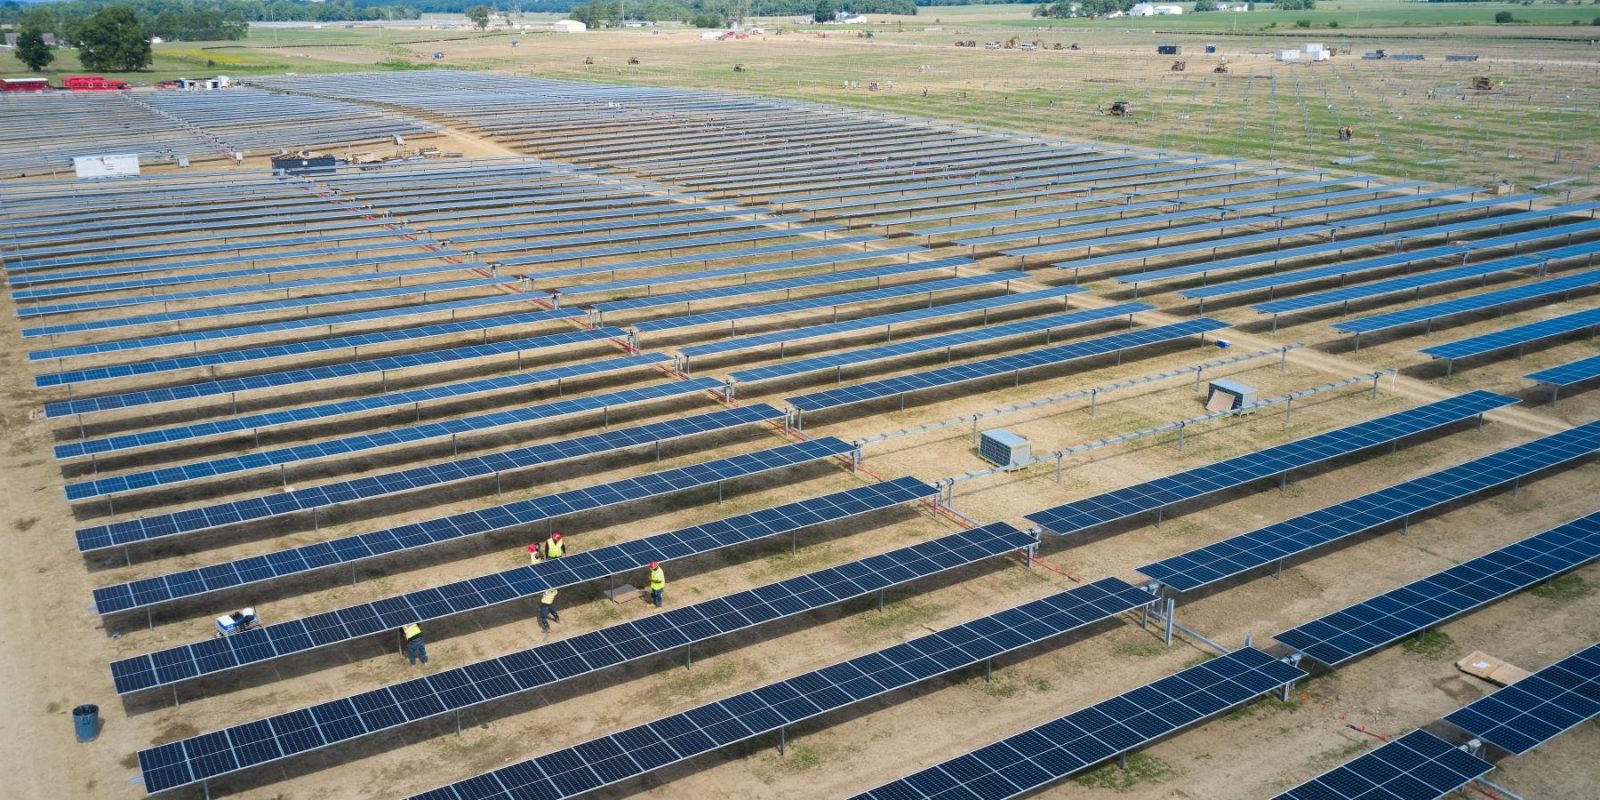 Indiana's largest solar farm